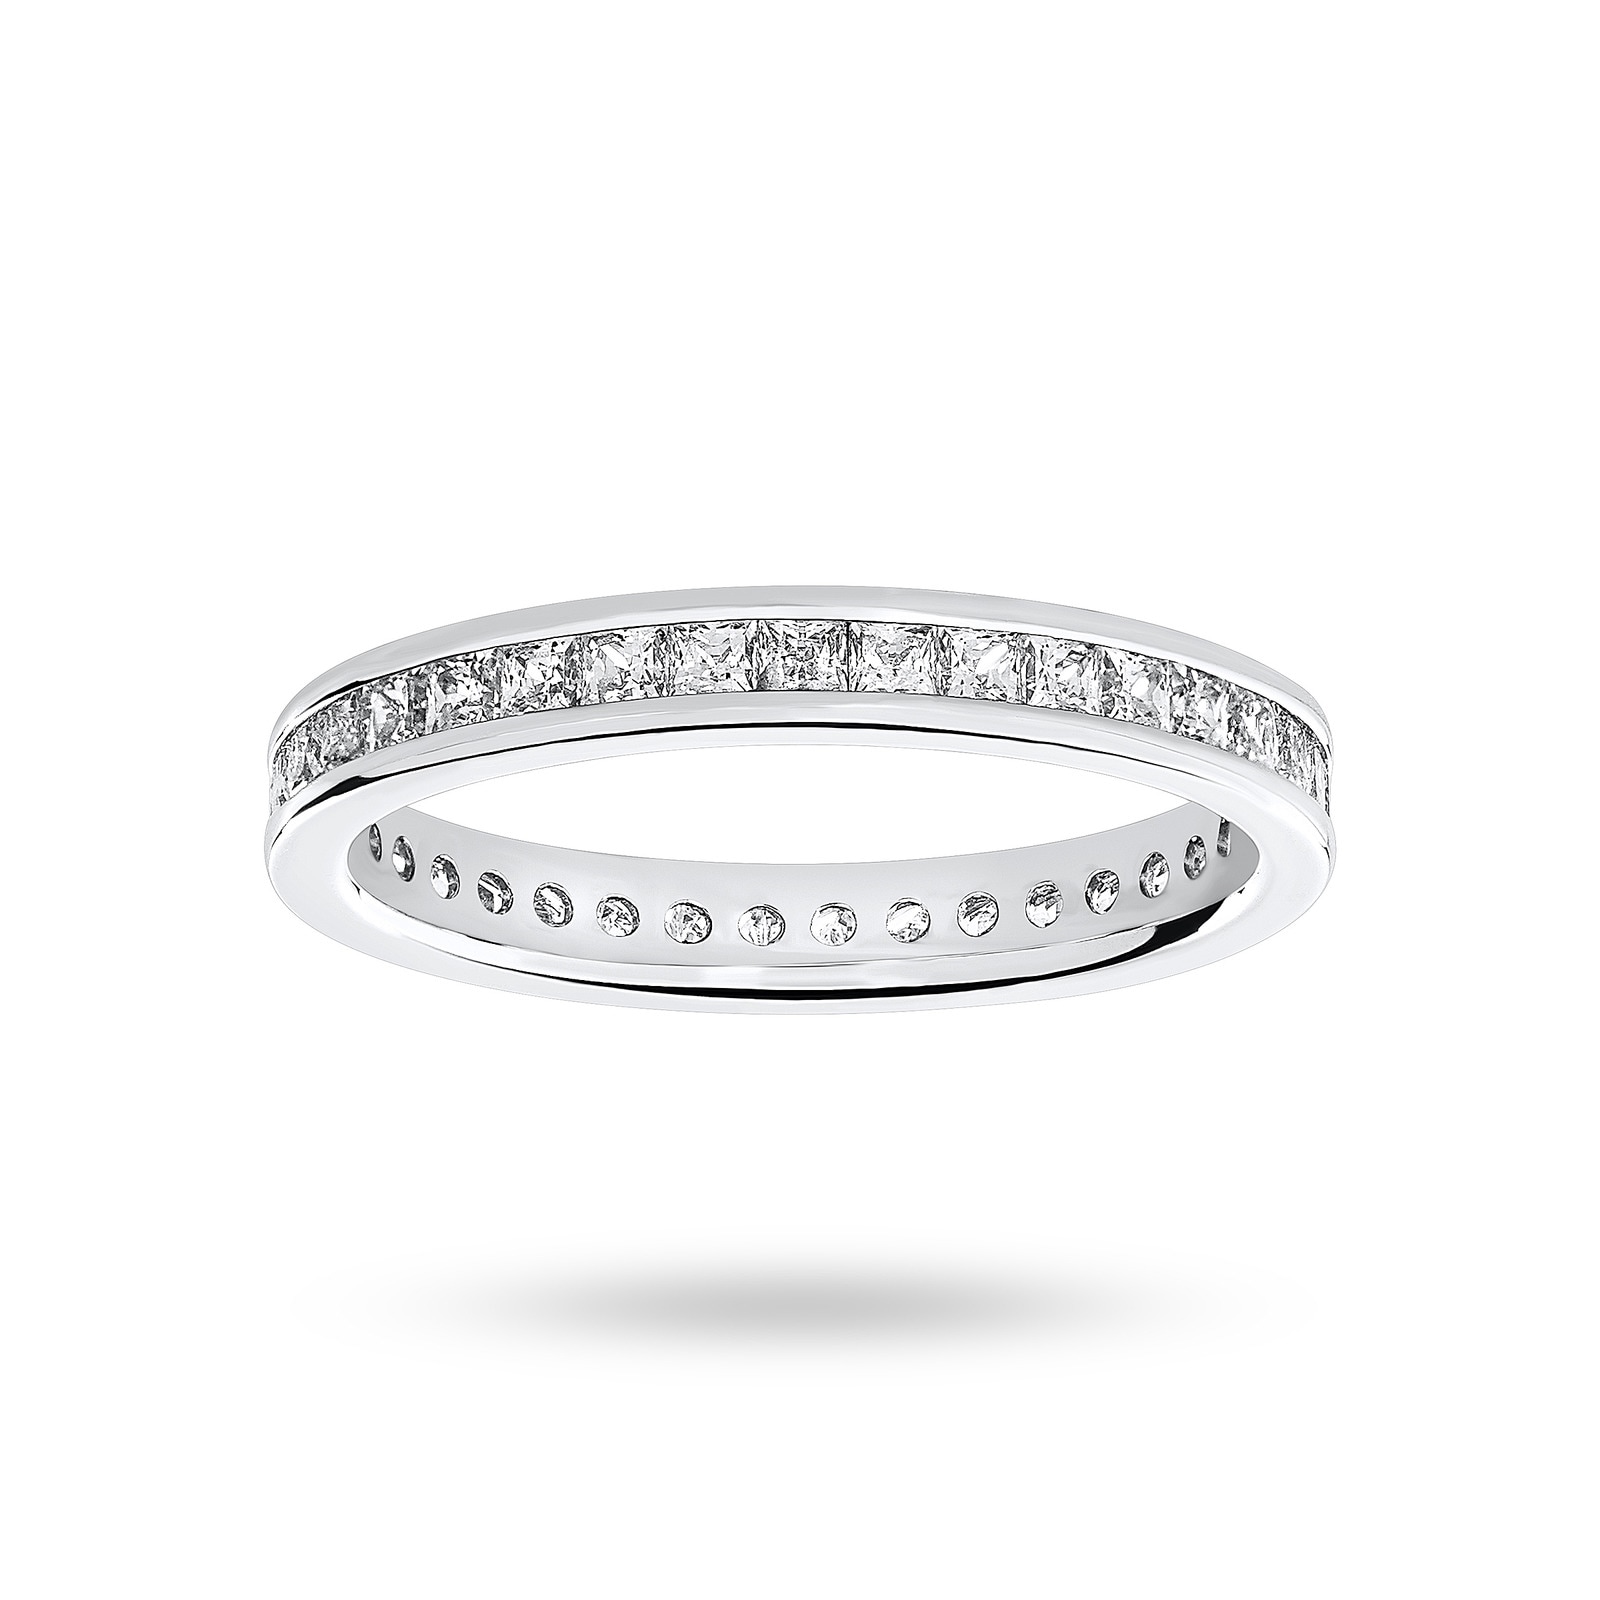 18 Carat White Gold 1.00 Carat Princess Cut Channel Set Full Eternity Ring - Ring Size P